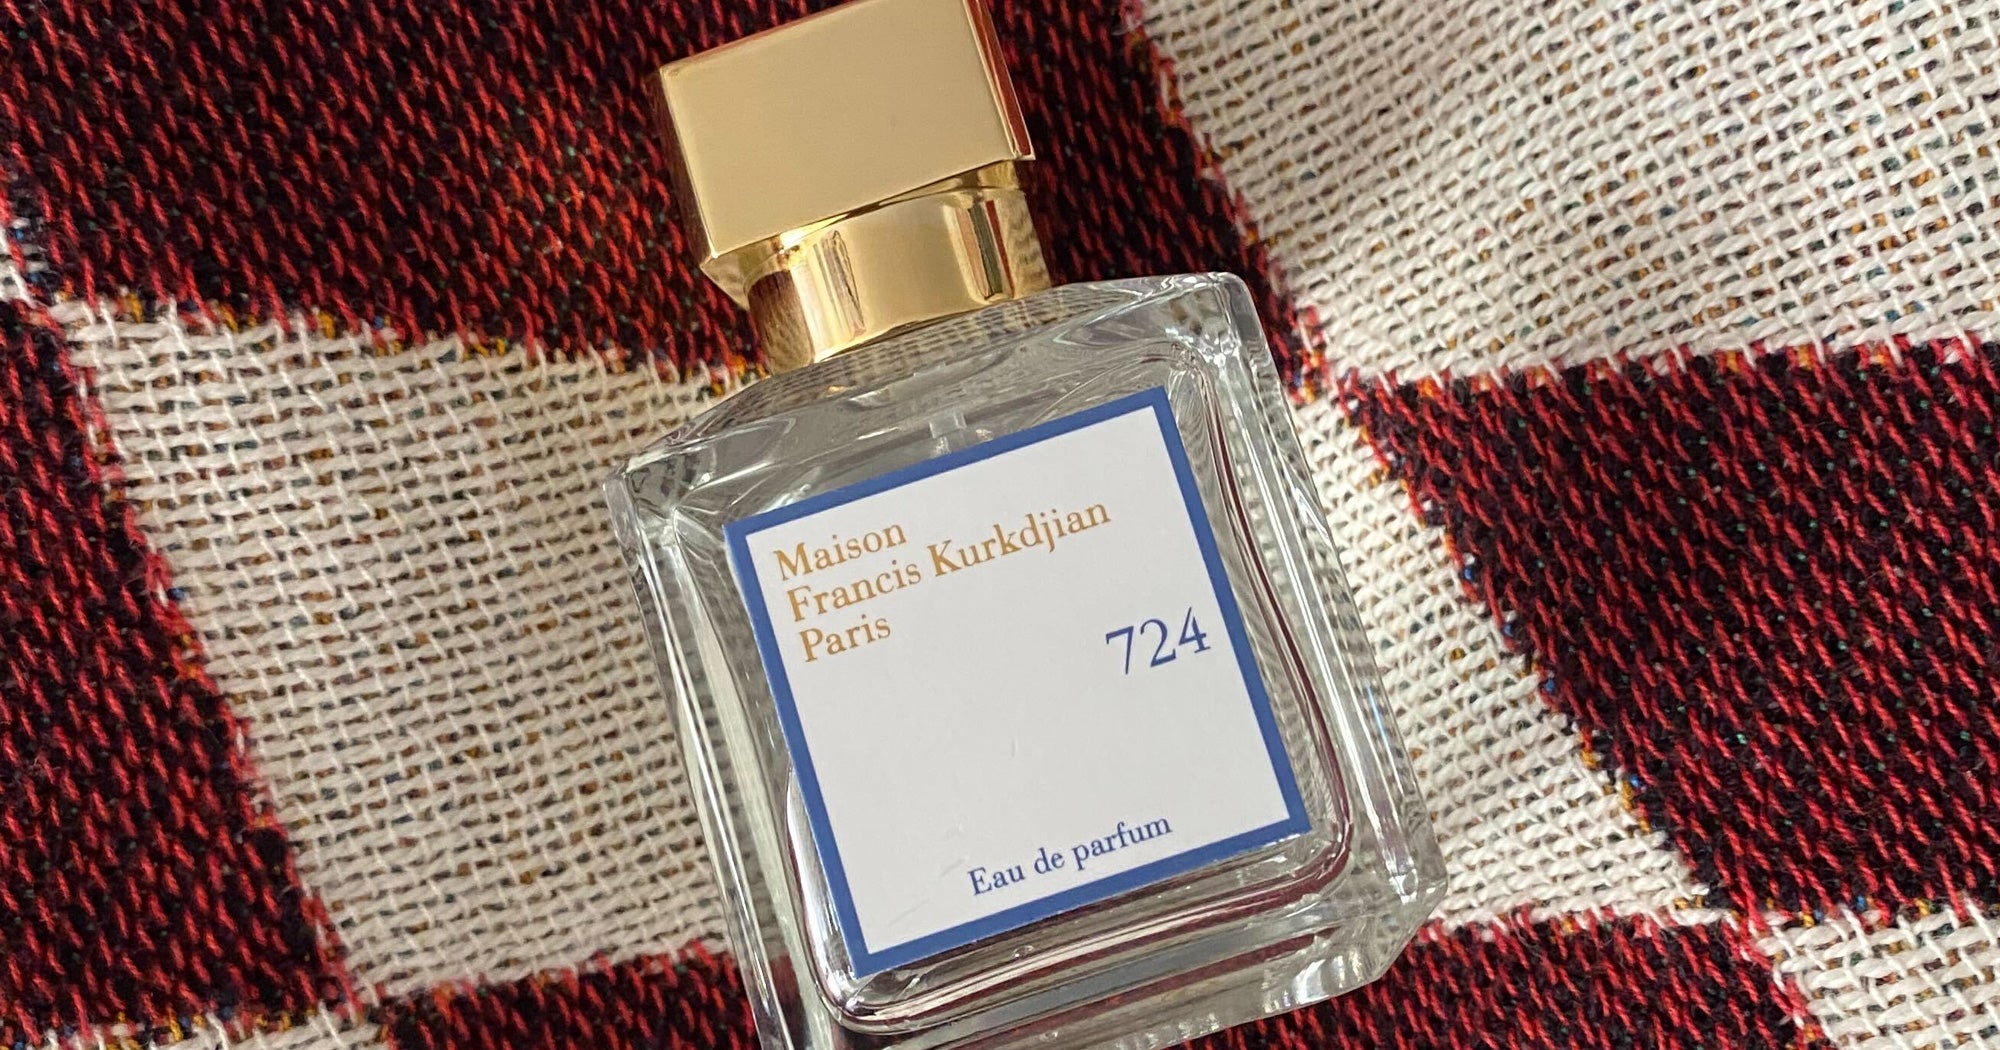 World renown perfumer Francis Kurkdjian on hitting the right notes